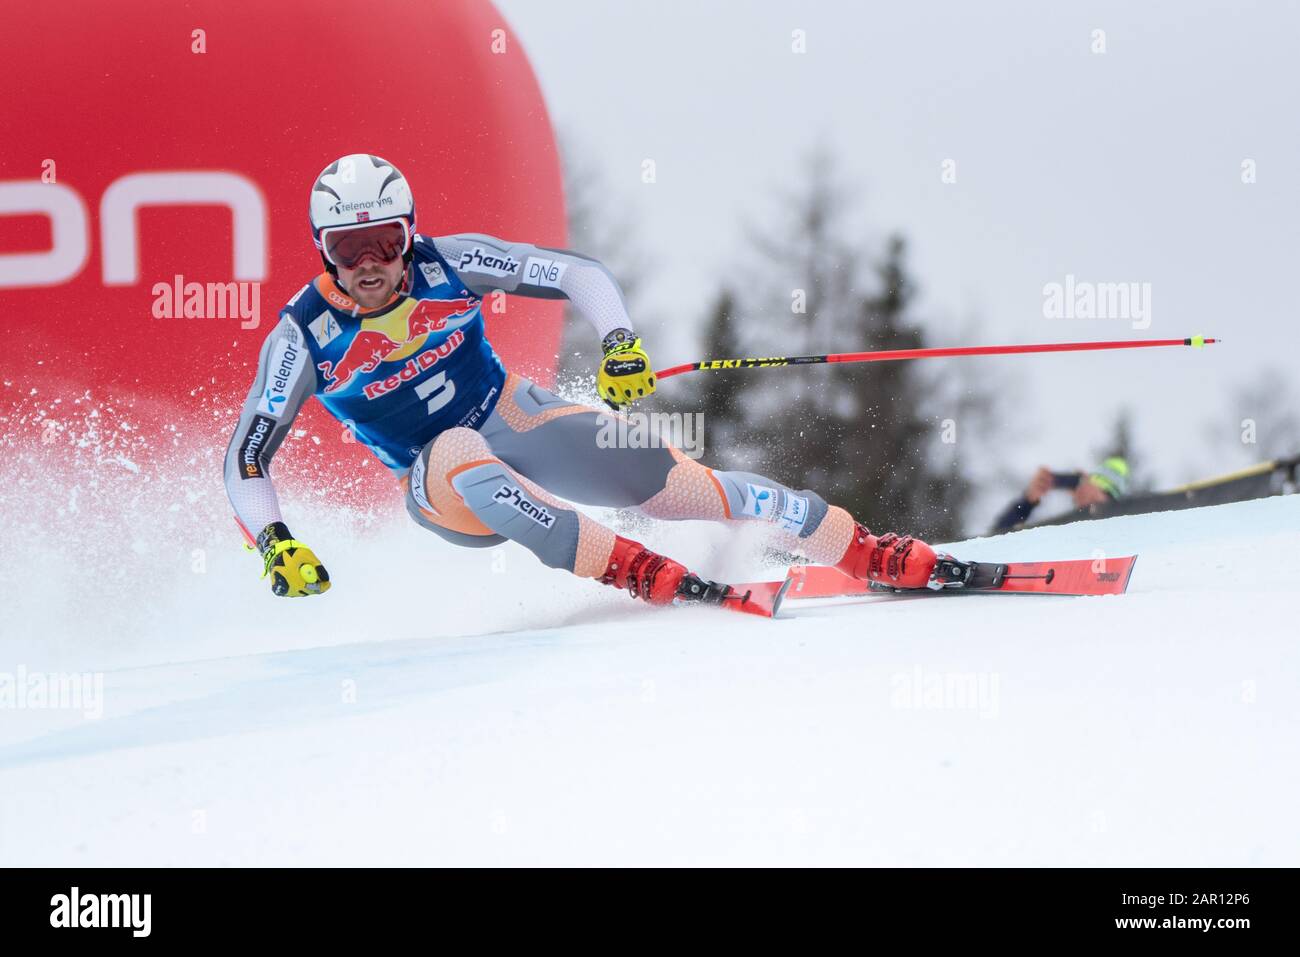 Kitzbuehel, Austria. 25th Jan 2020. Aleksander Aamodt Kilde of Norway at  the Ski Alpin: 80. Hahnenkamm Race 2020 - Audi FIS Alpine Ski World Cup -  Men's Downhill at the Streif on